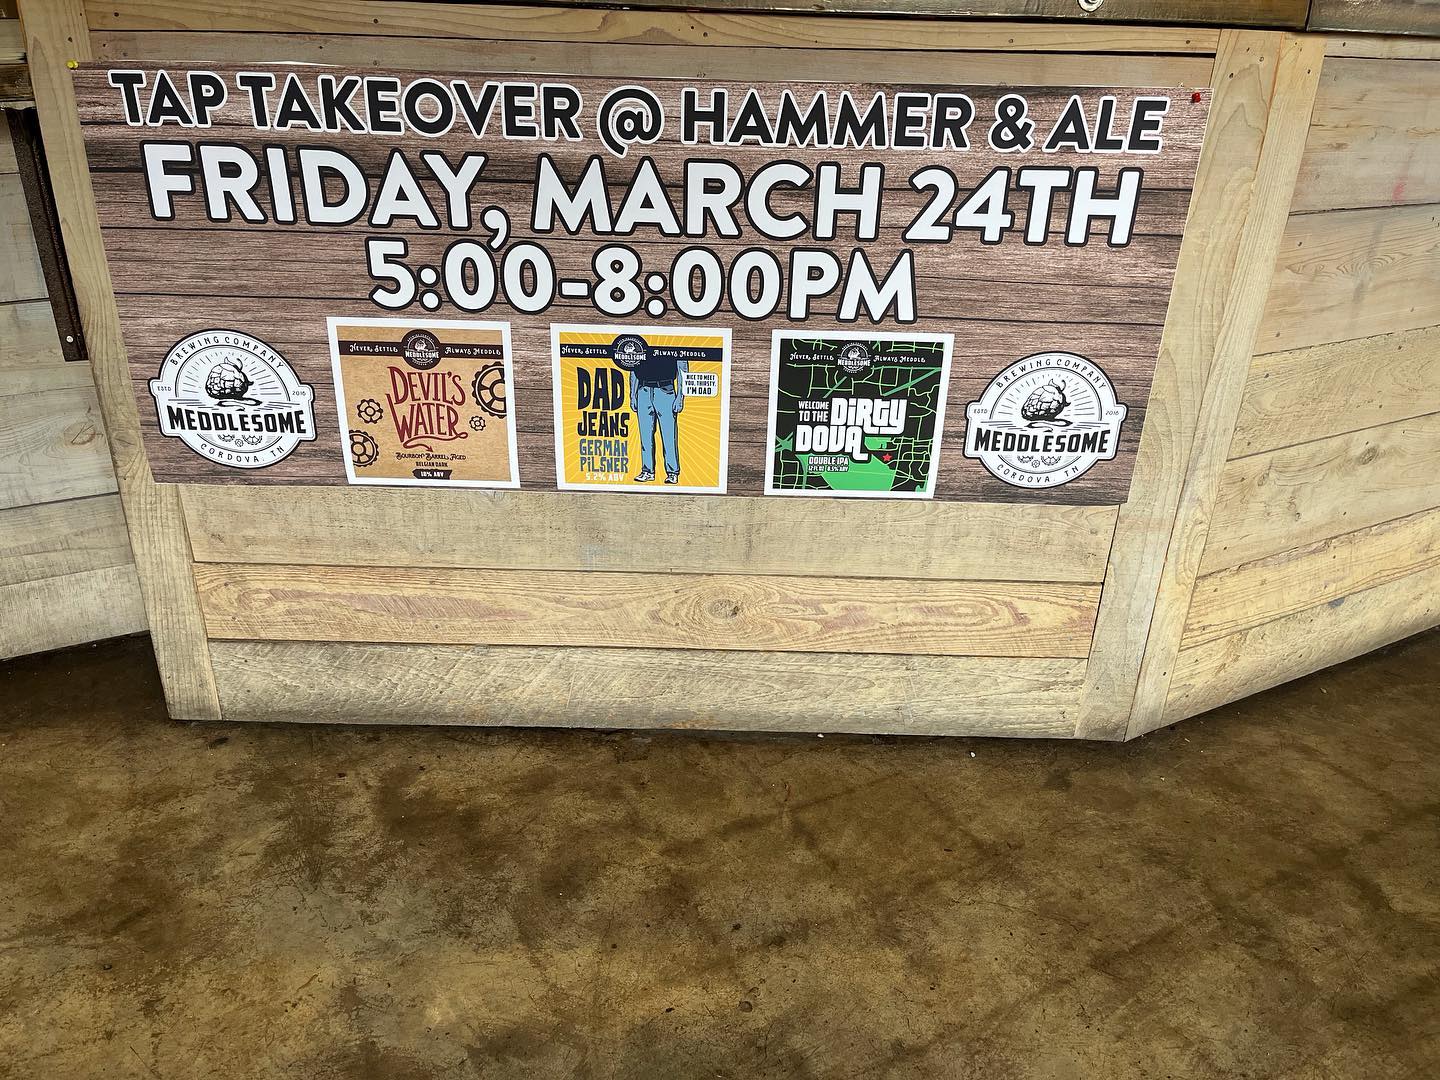 Hammer & Ale